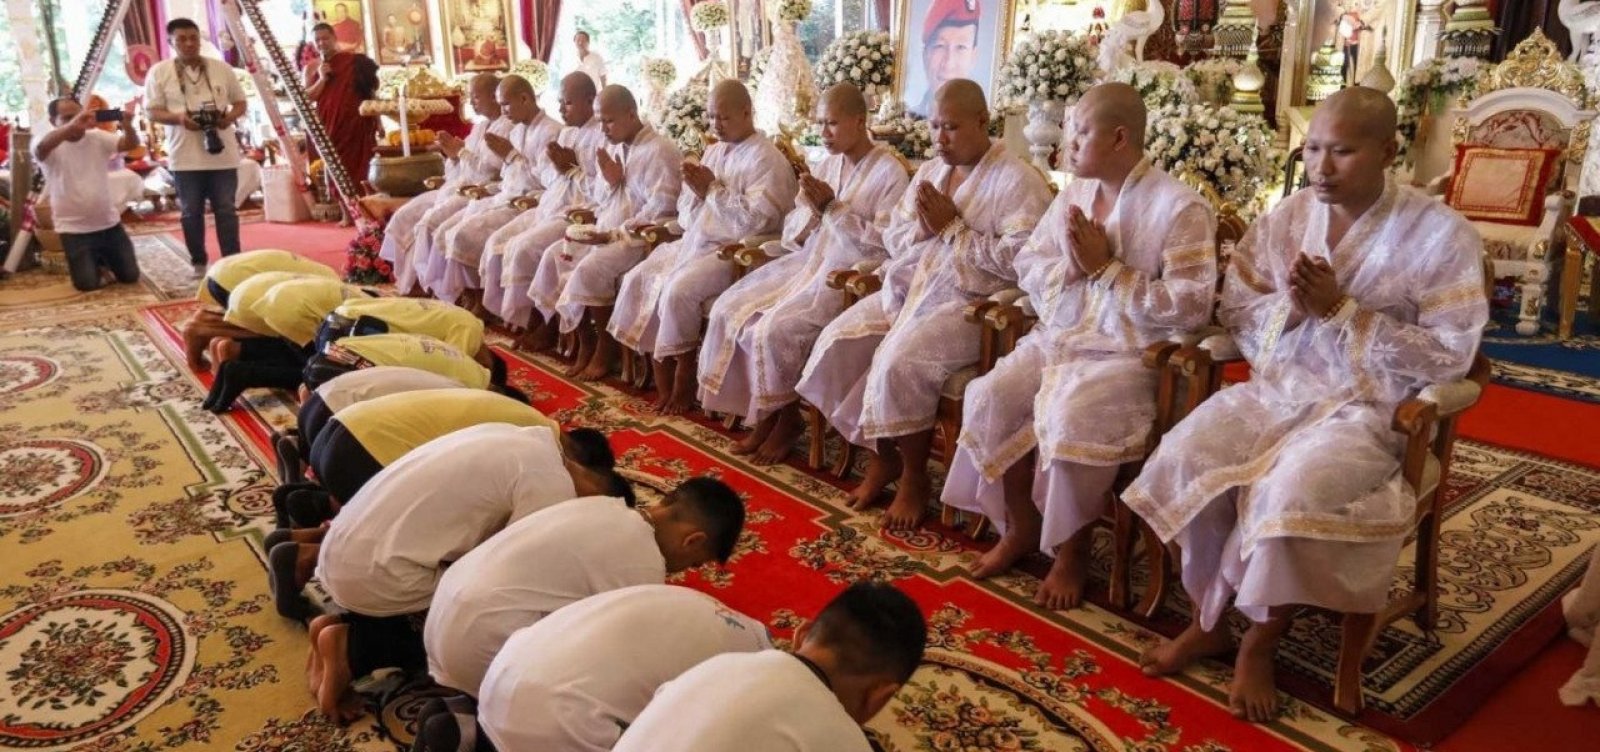 ‘Javalis Selvagens’ visitam templo budista para agradecer recuperação 